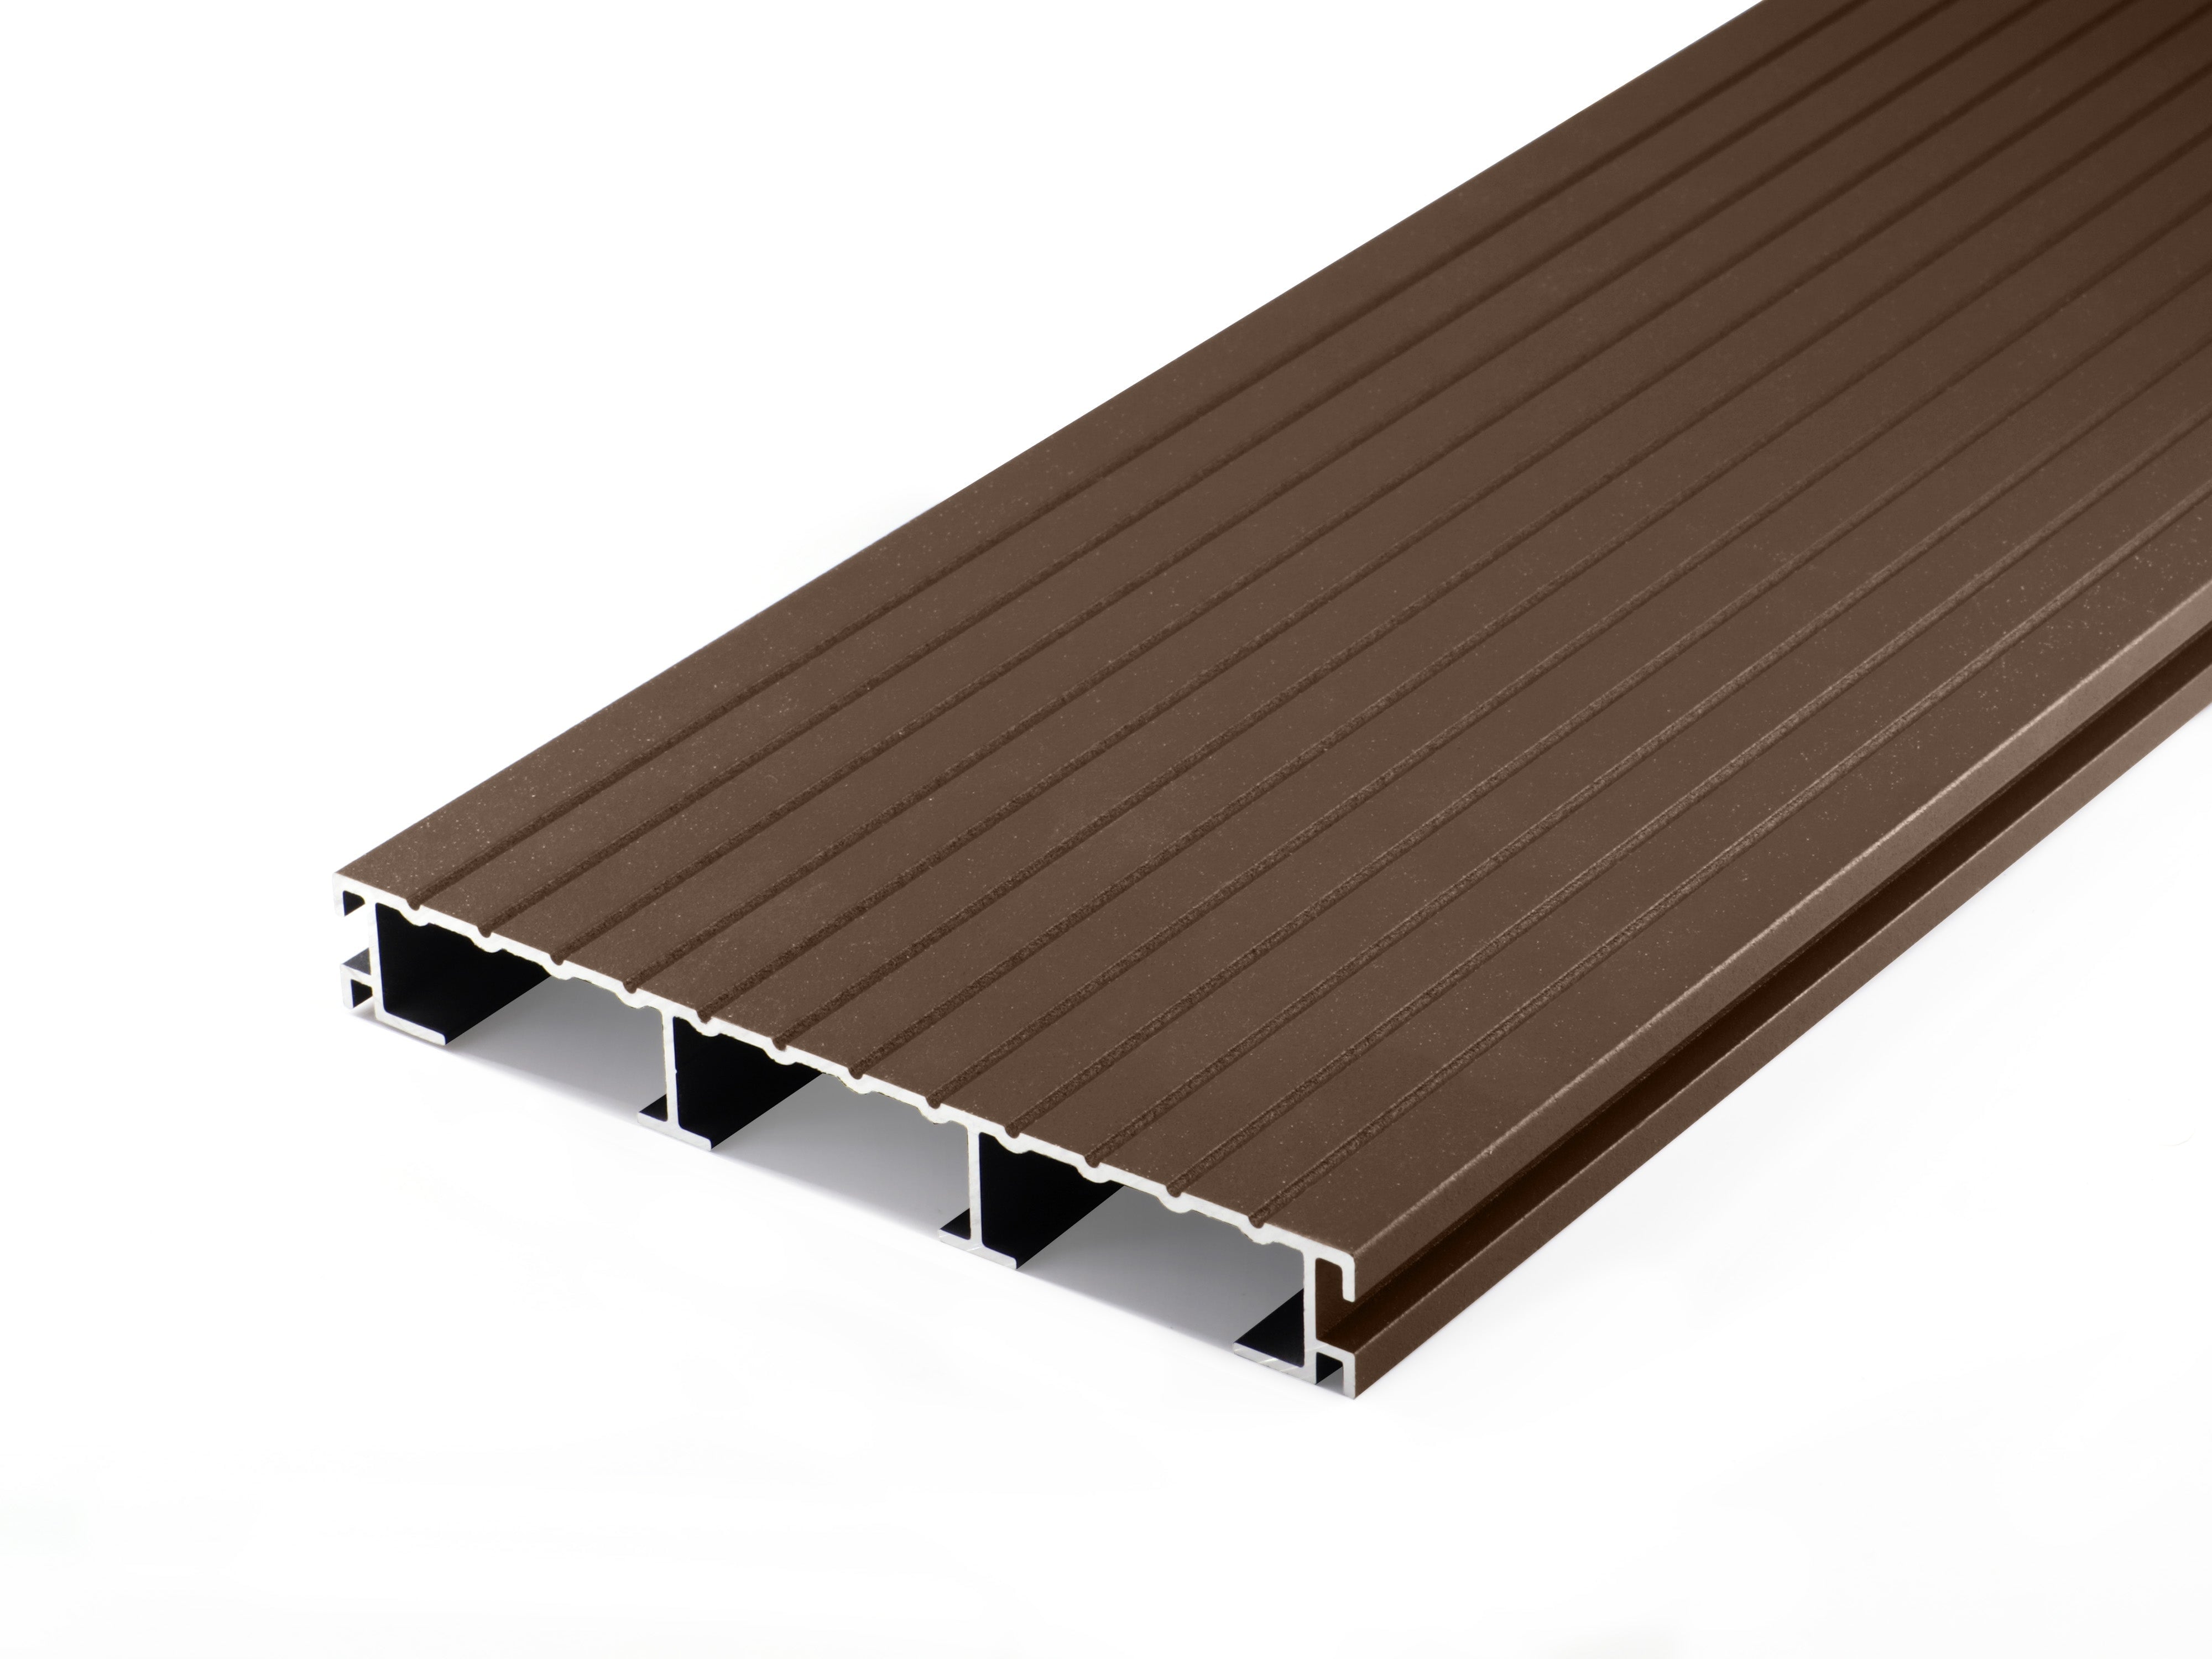 Non-combustible Aluminium Decking Board | RAL 8014 Sepia Brown | 200mm x 25mm x 3.2m